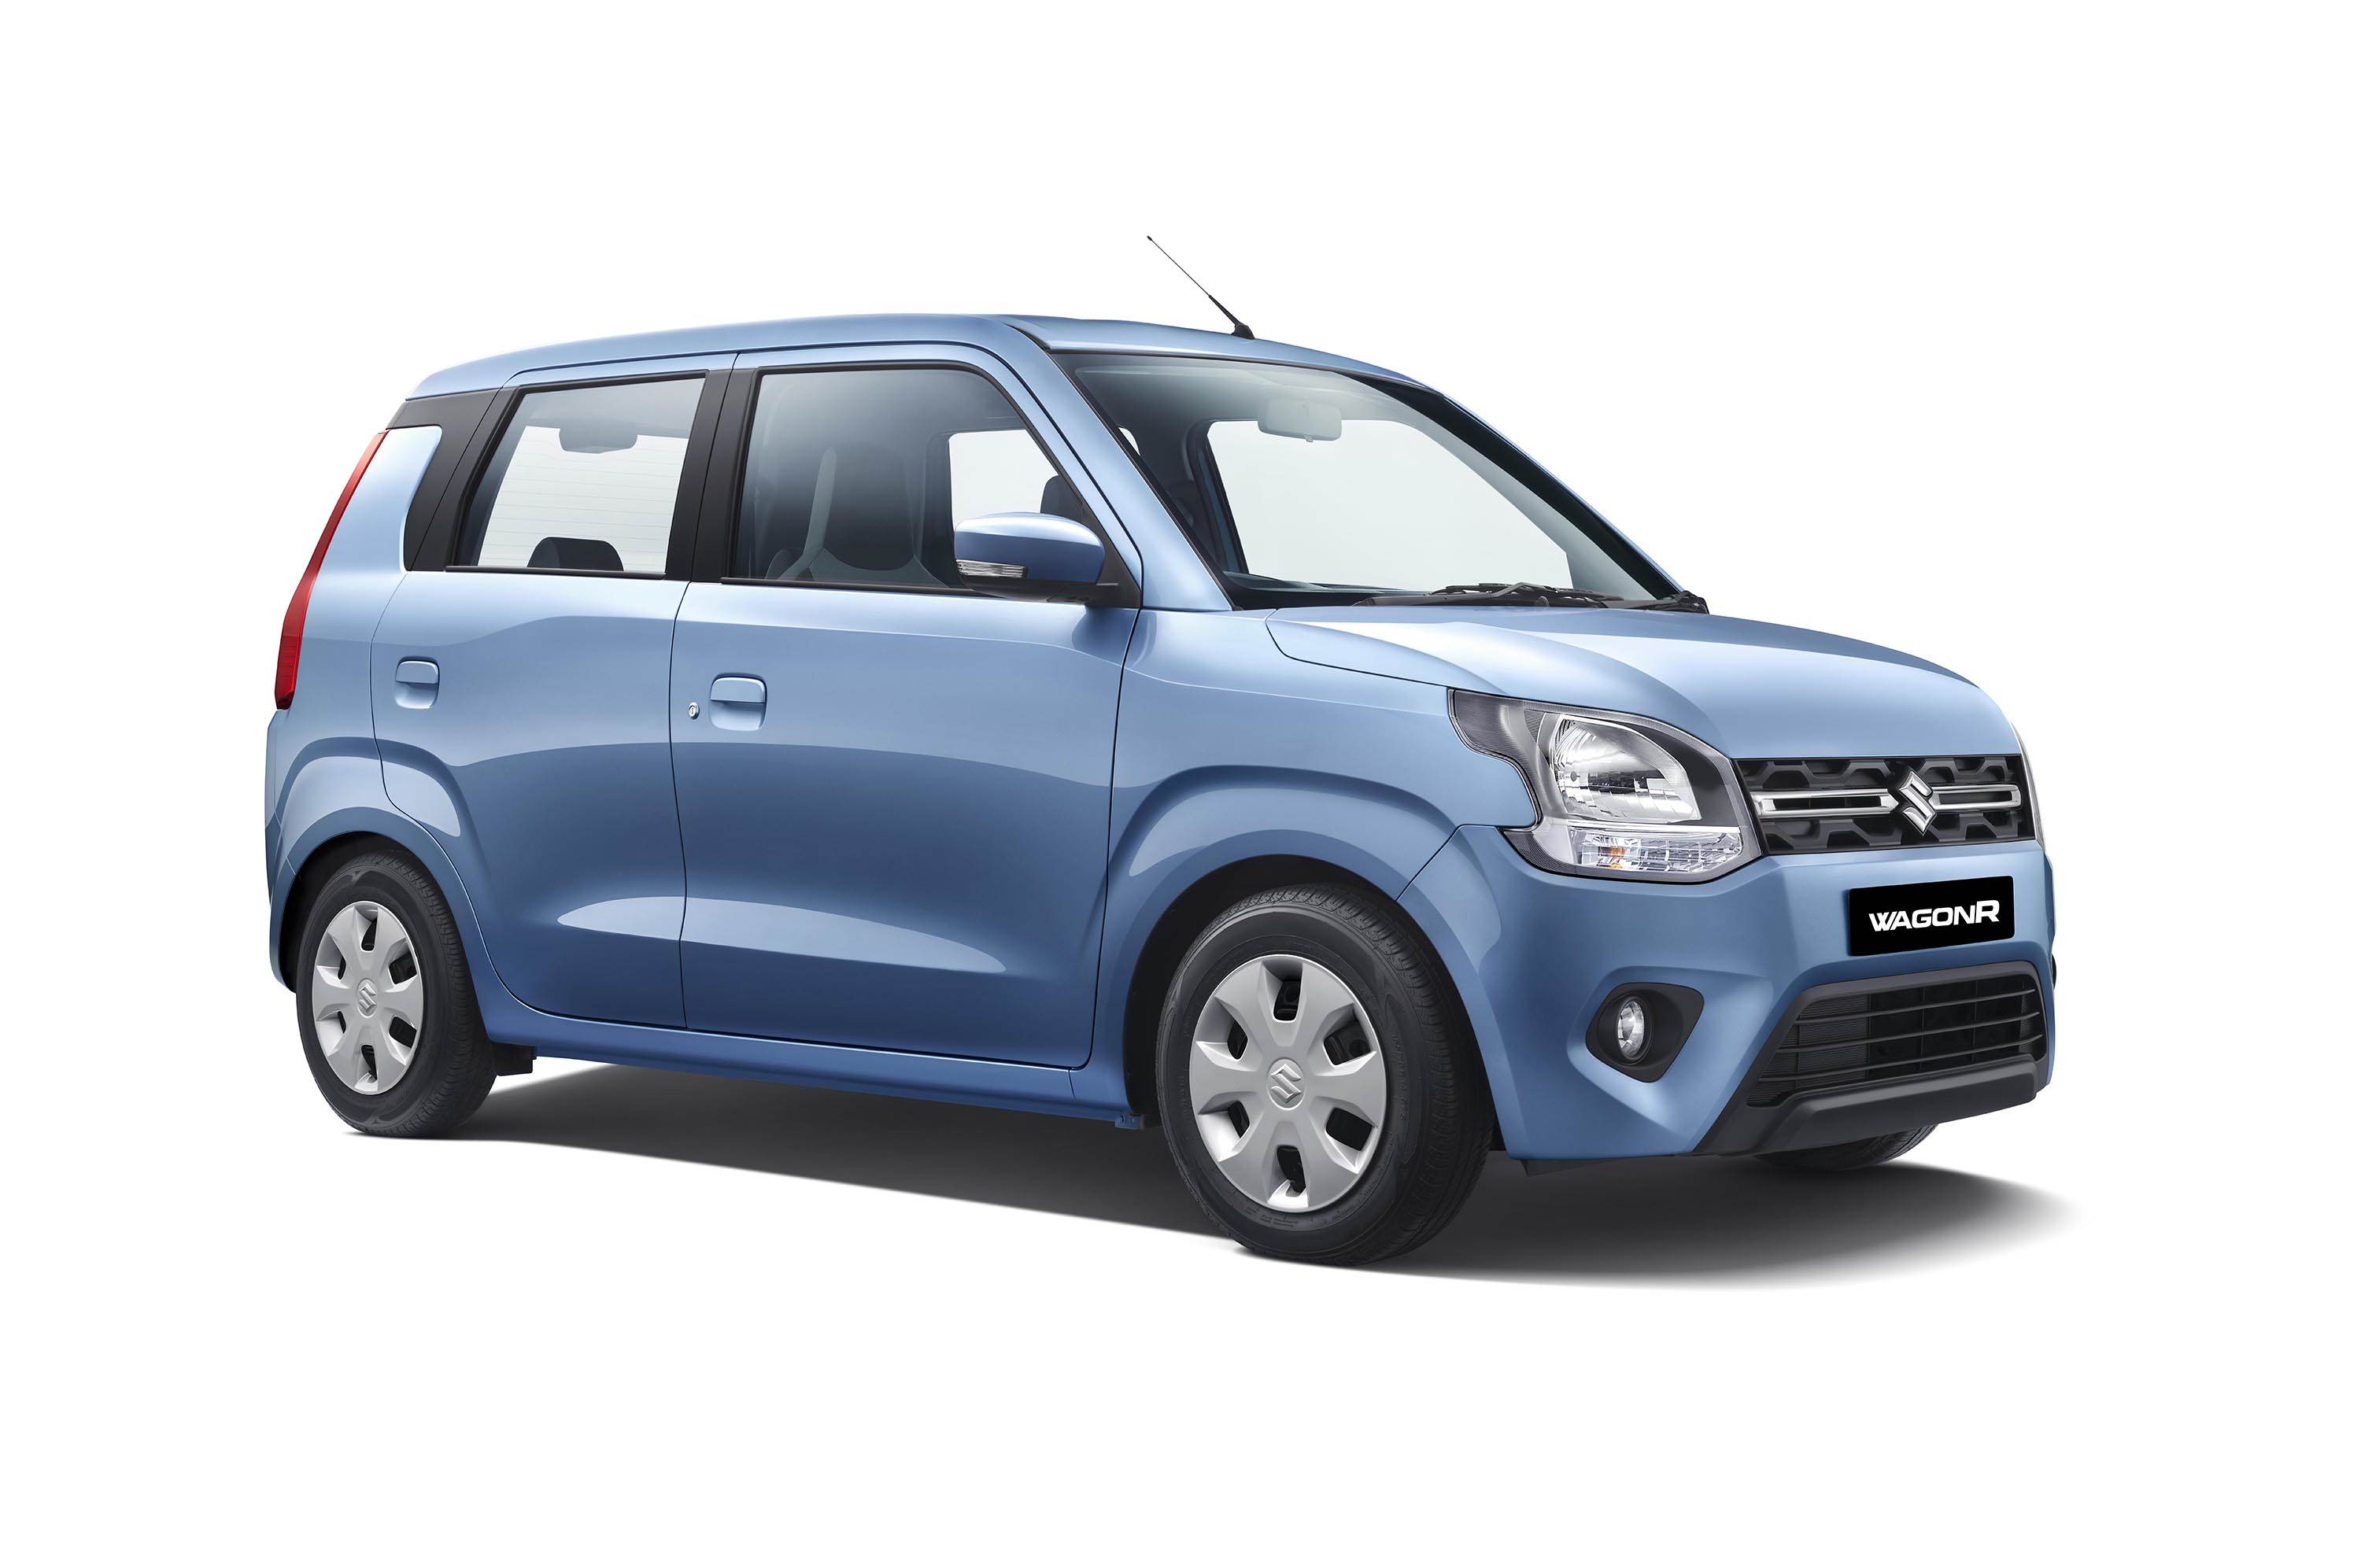 Maruti Suzuki Wagon R Price, Images, Reviews and Specs | Autocar India